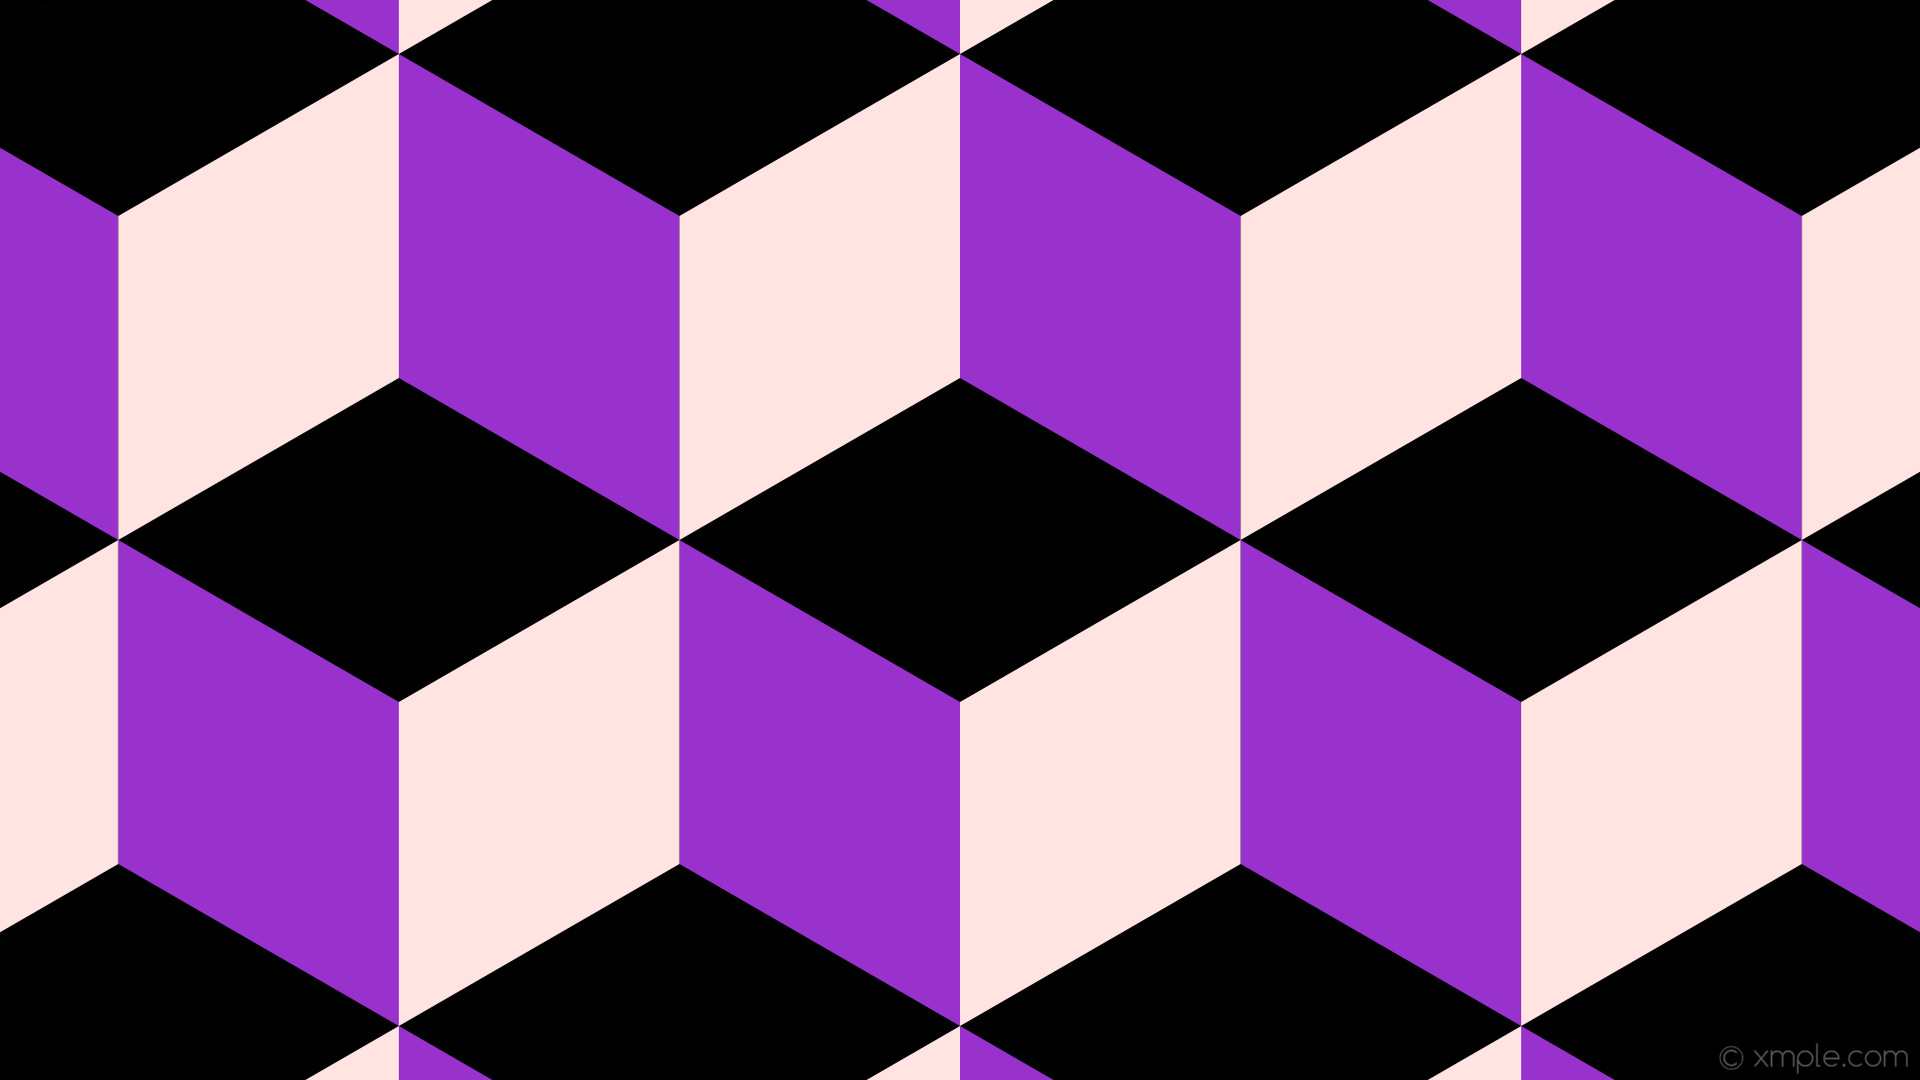 1920x1080 wallpaper purple 3d cubes white black dark orchid misty rose #000000  #9932cc #ffe4e1